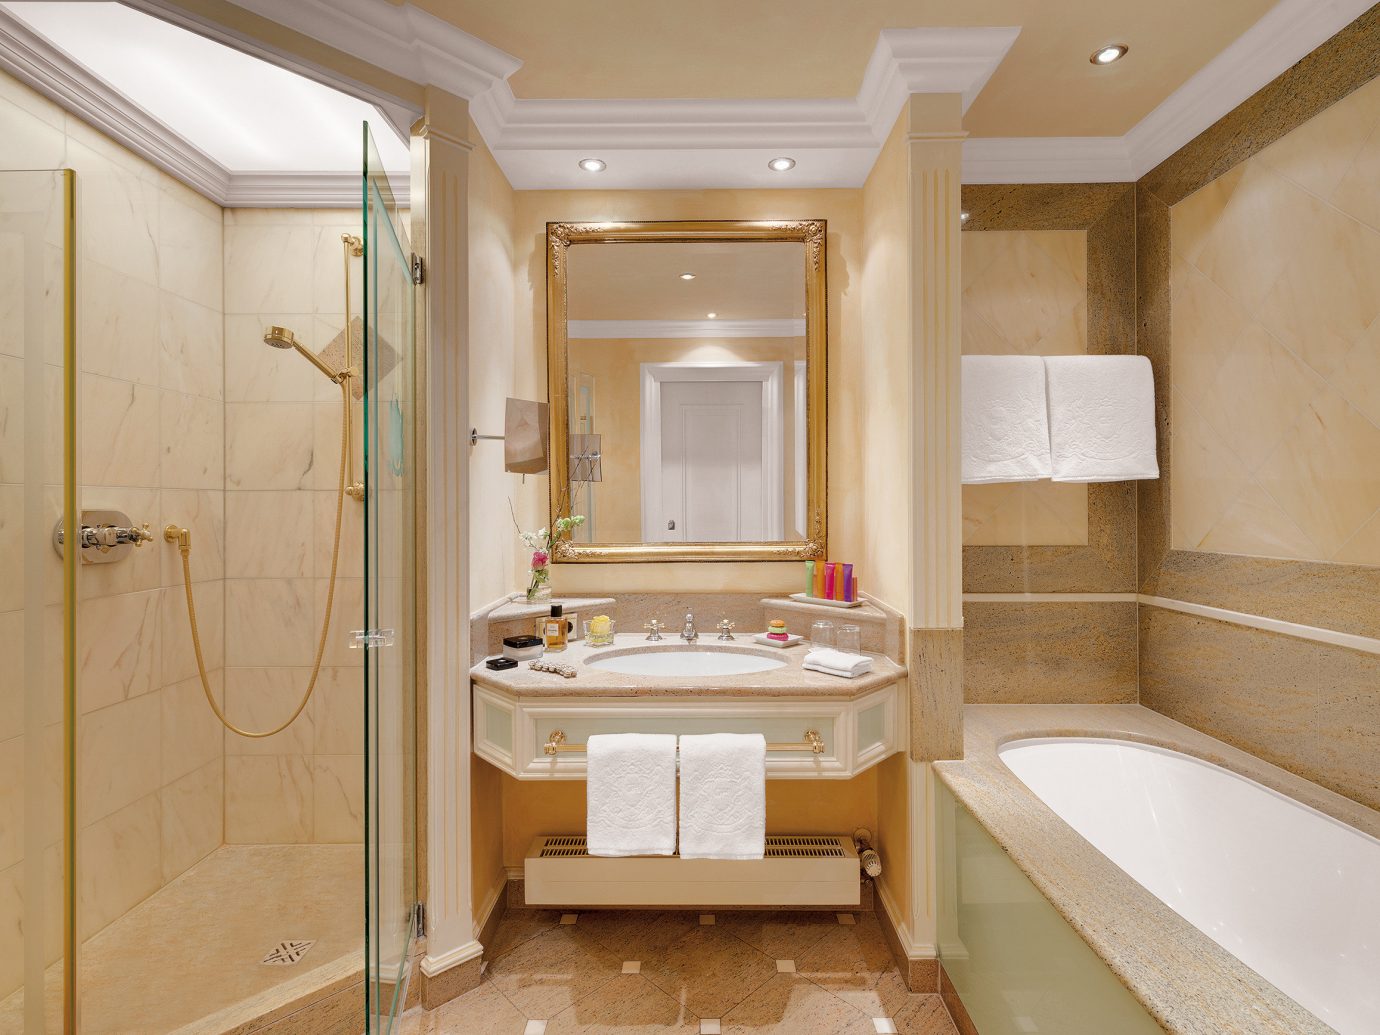 europe Germany Hotels Munich indoor bathroom wall room home interior design estate Suite real estate floor toilet